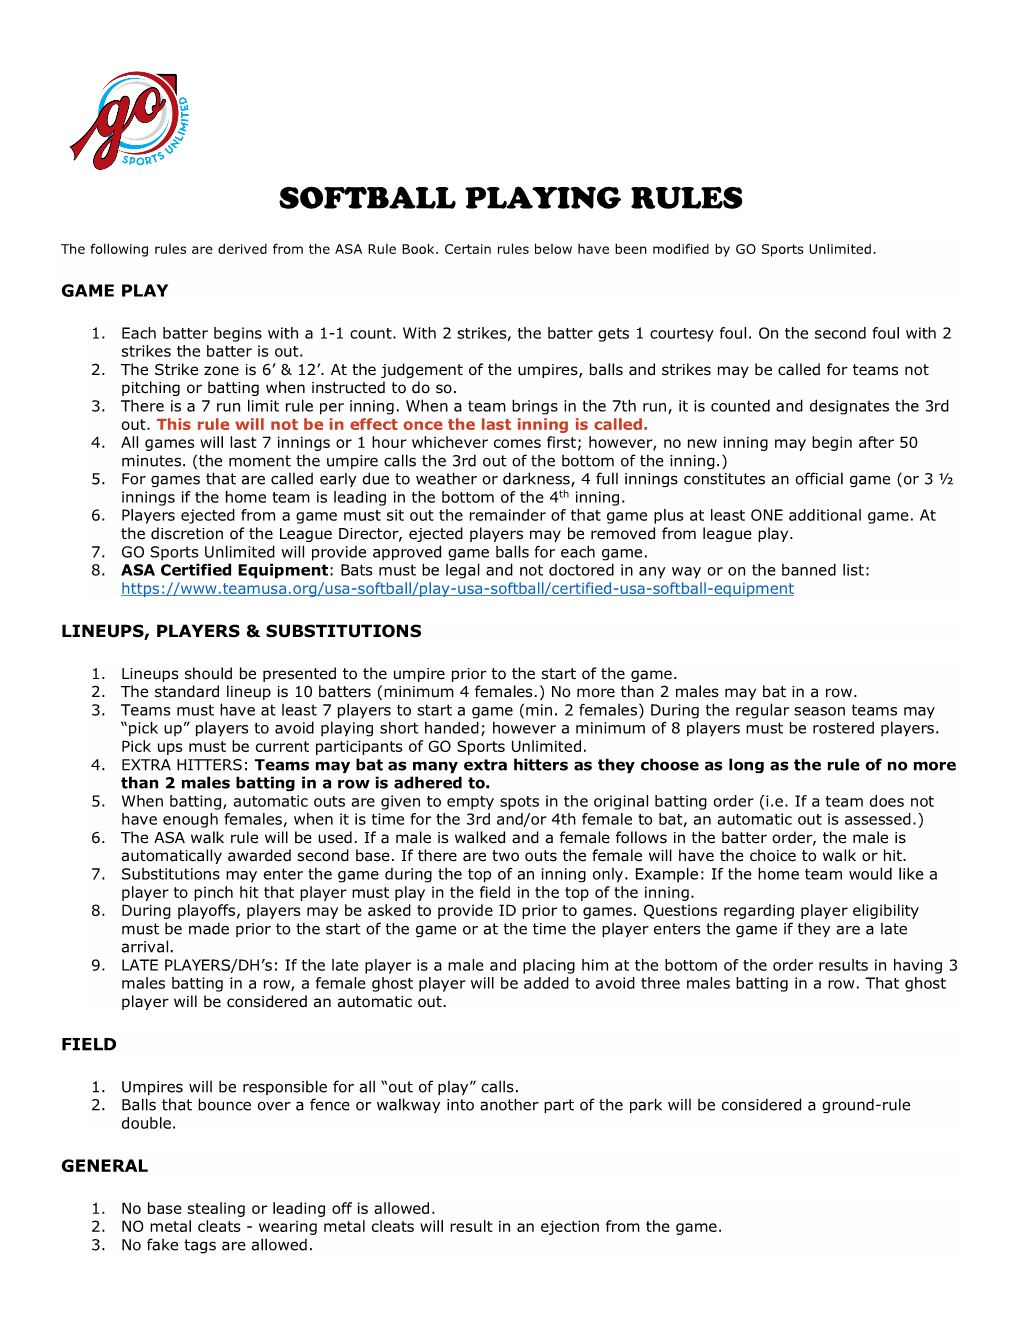 Softball Playing Rules